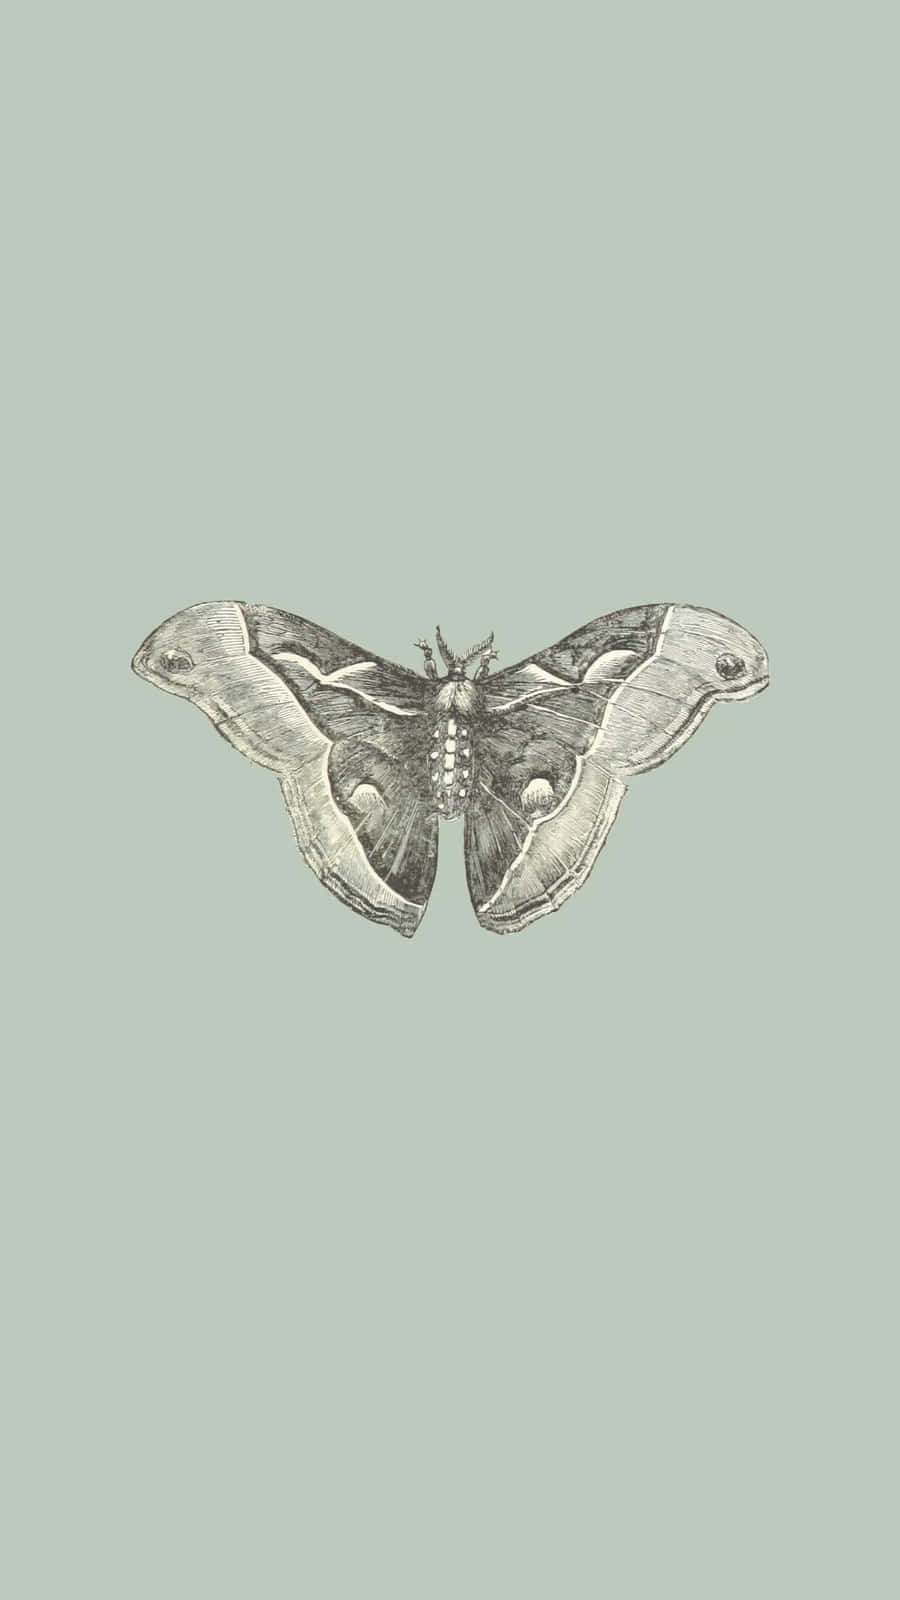 Vintage Moth Illustration Wallpaper